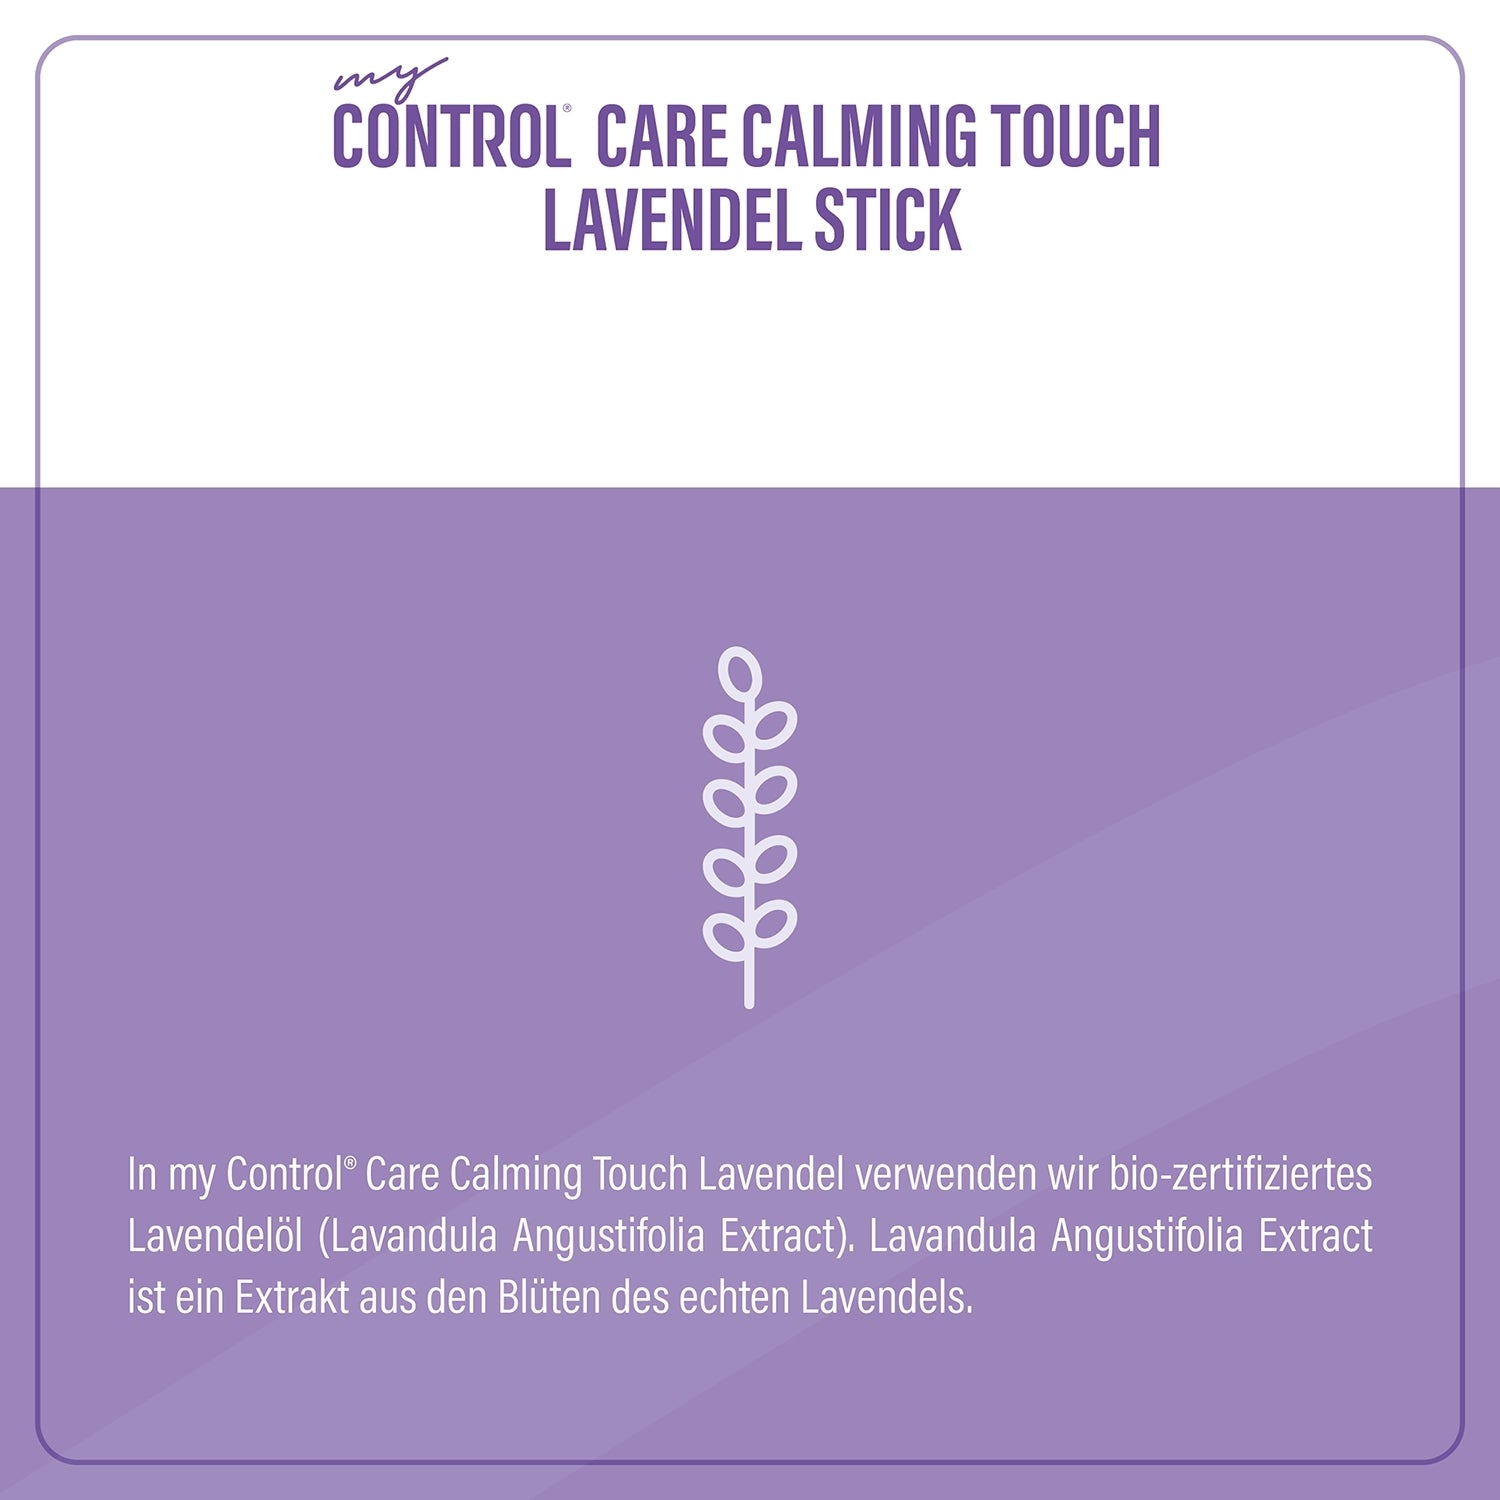 Bio-zertifiziertes Lavendelöl